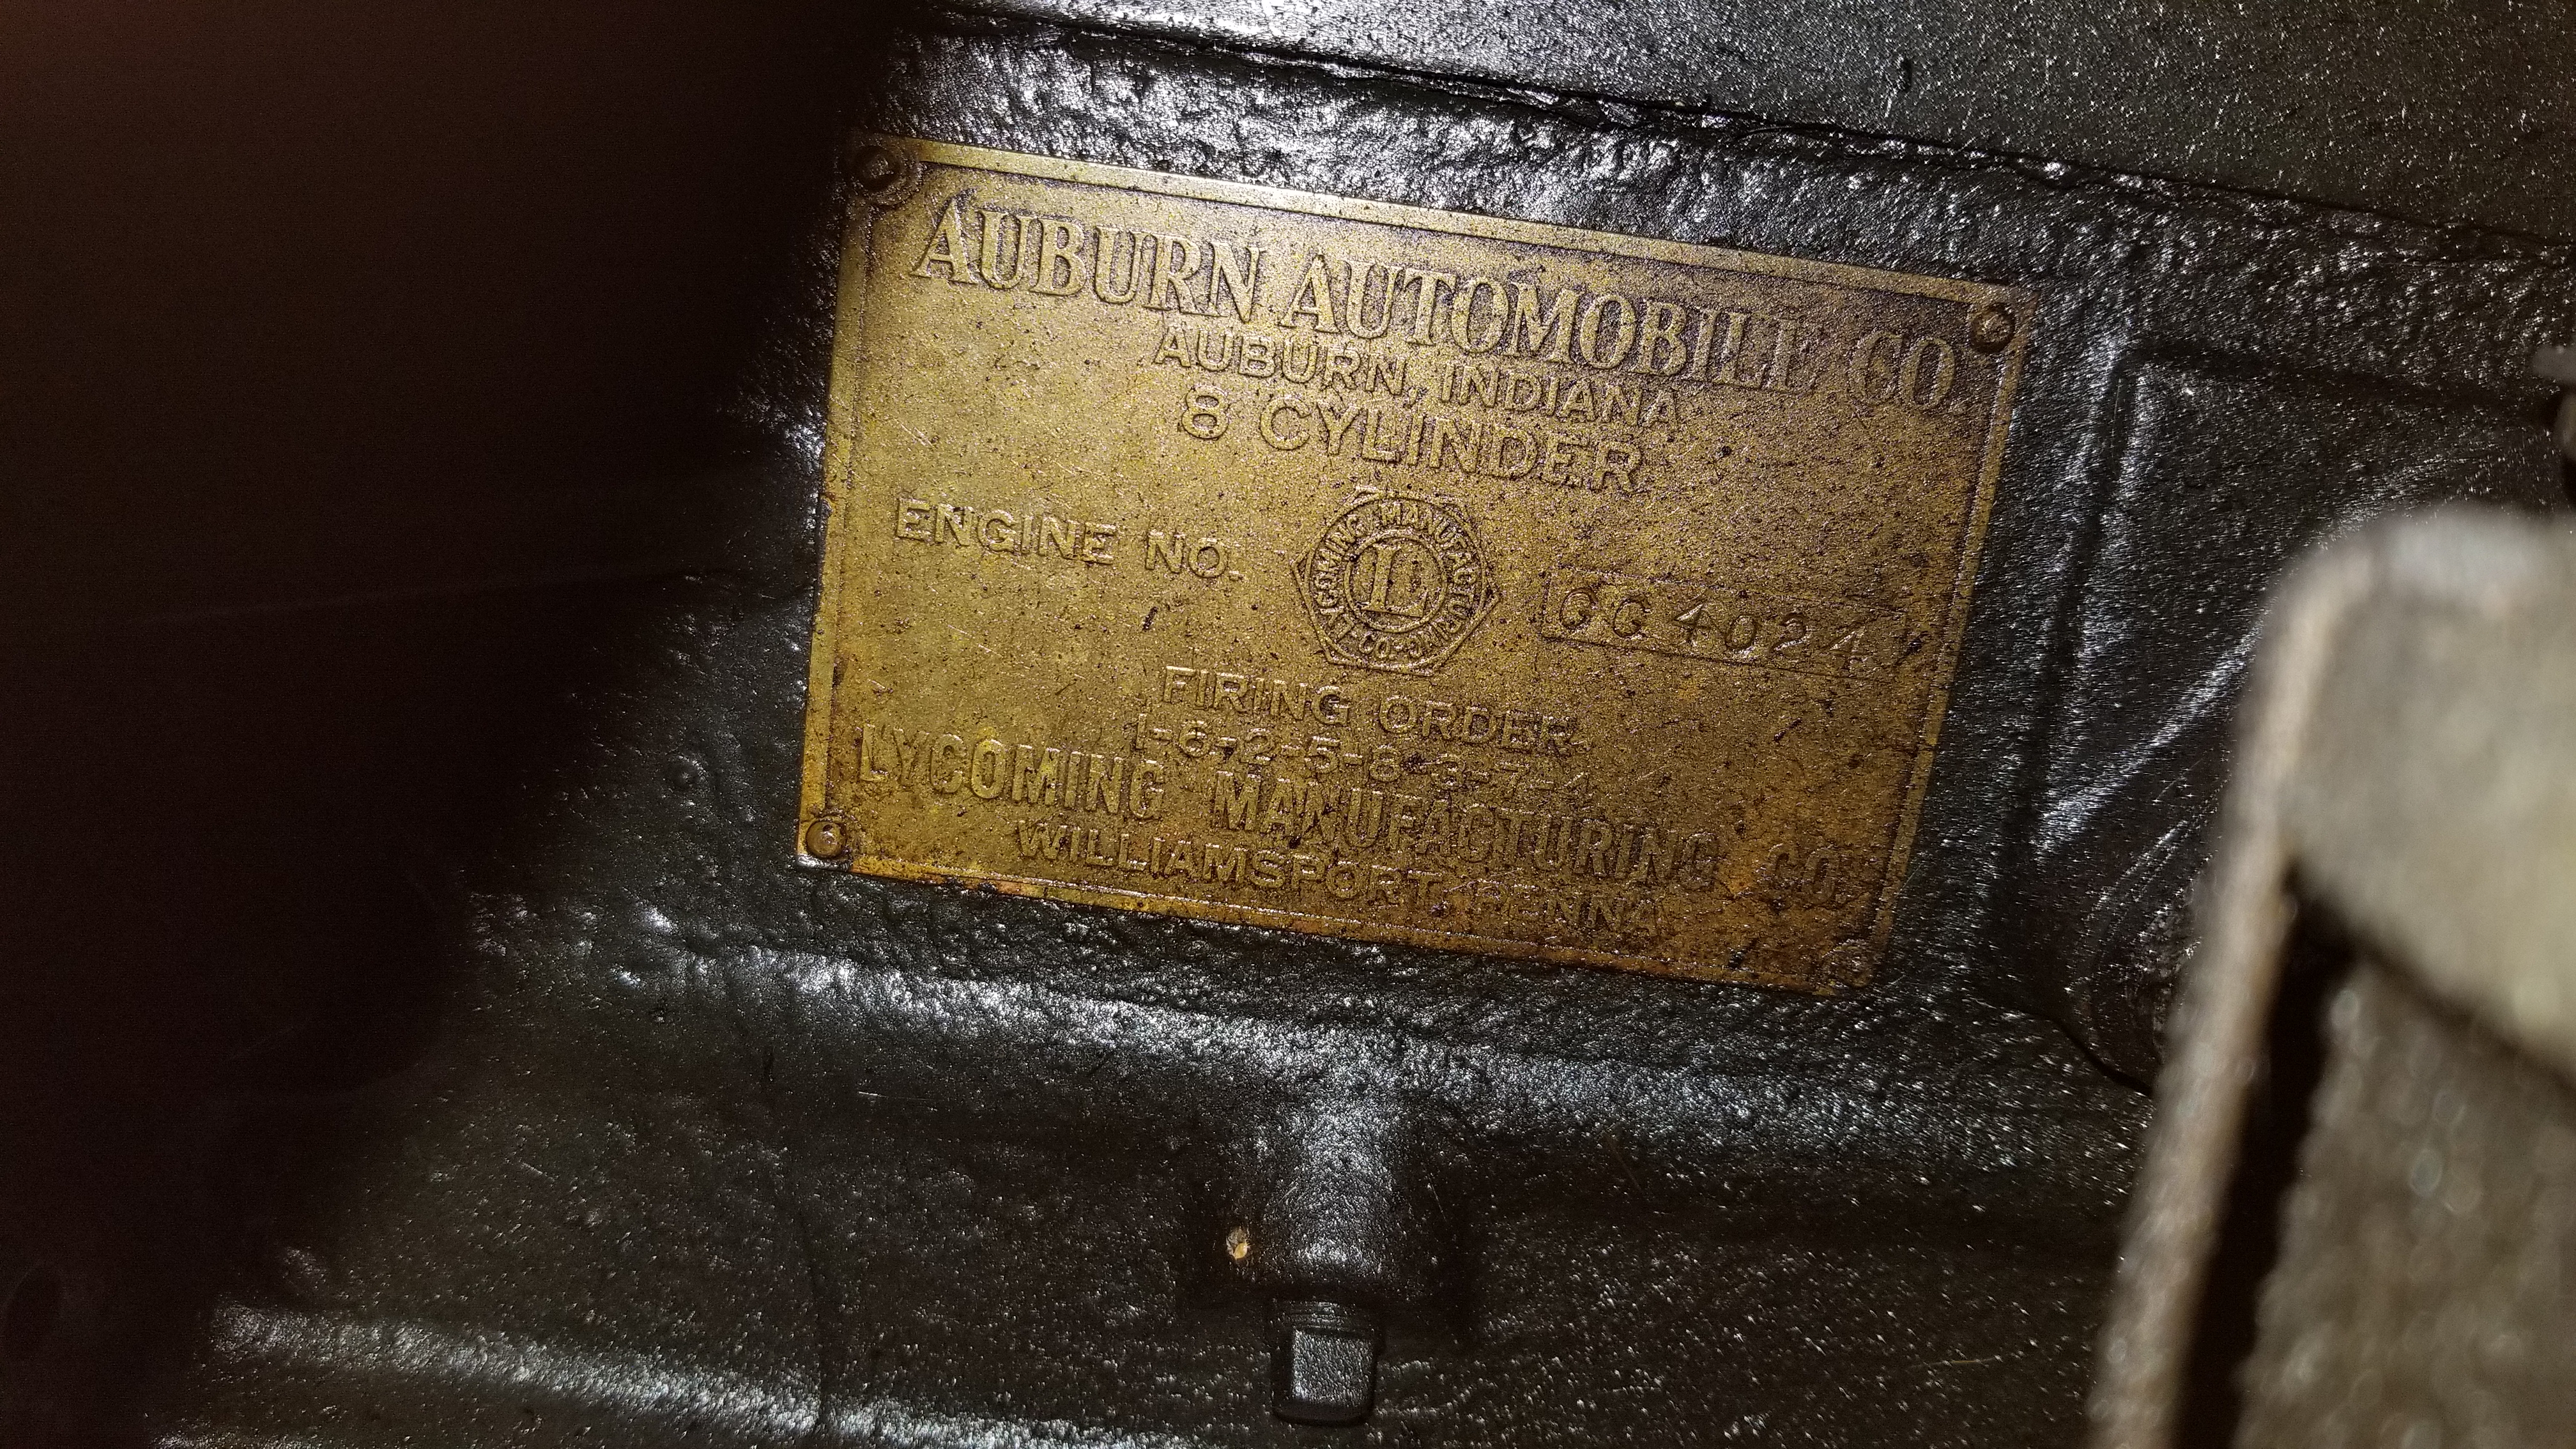 1935 auburn 851 supercharged